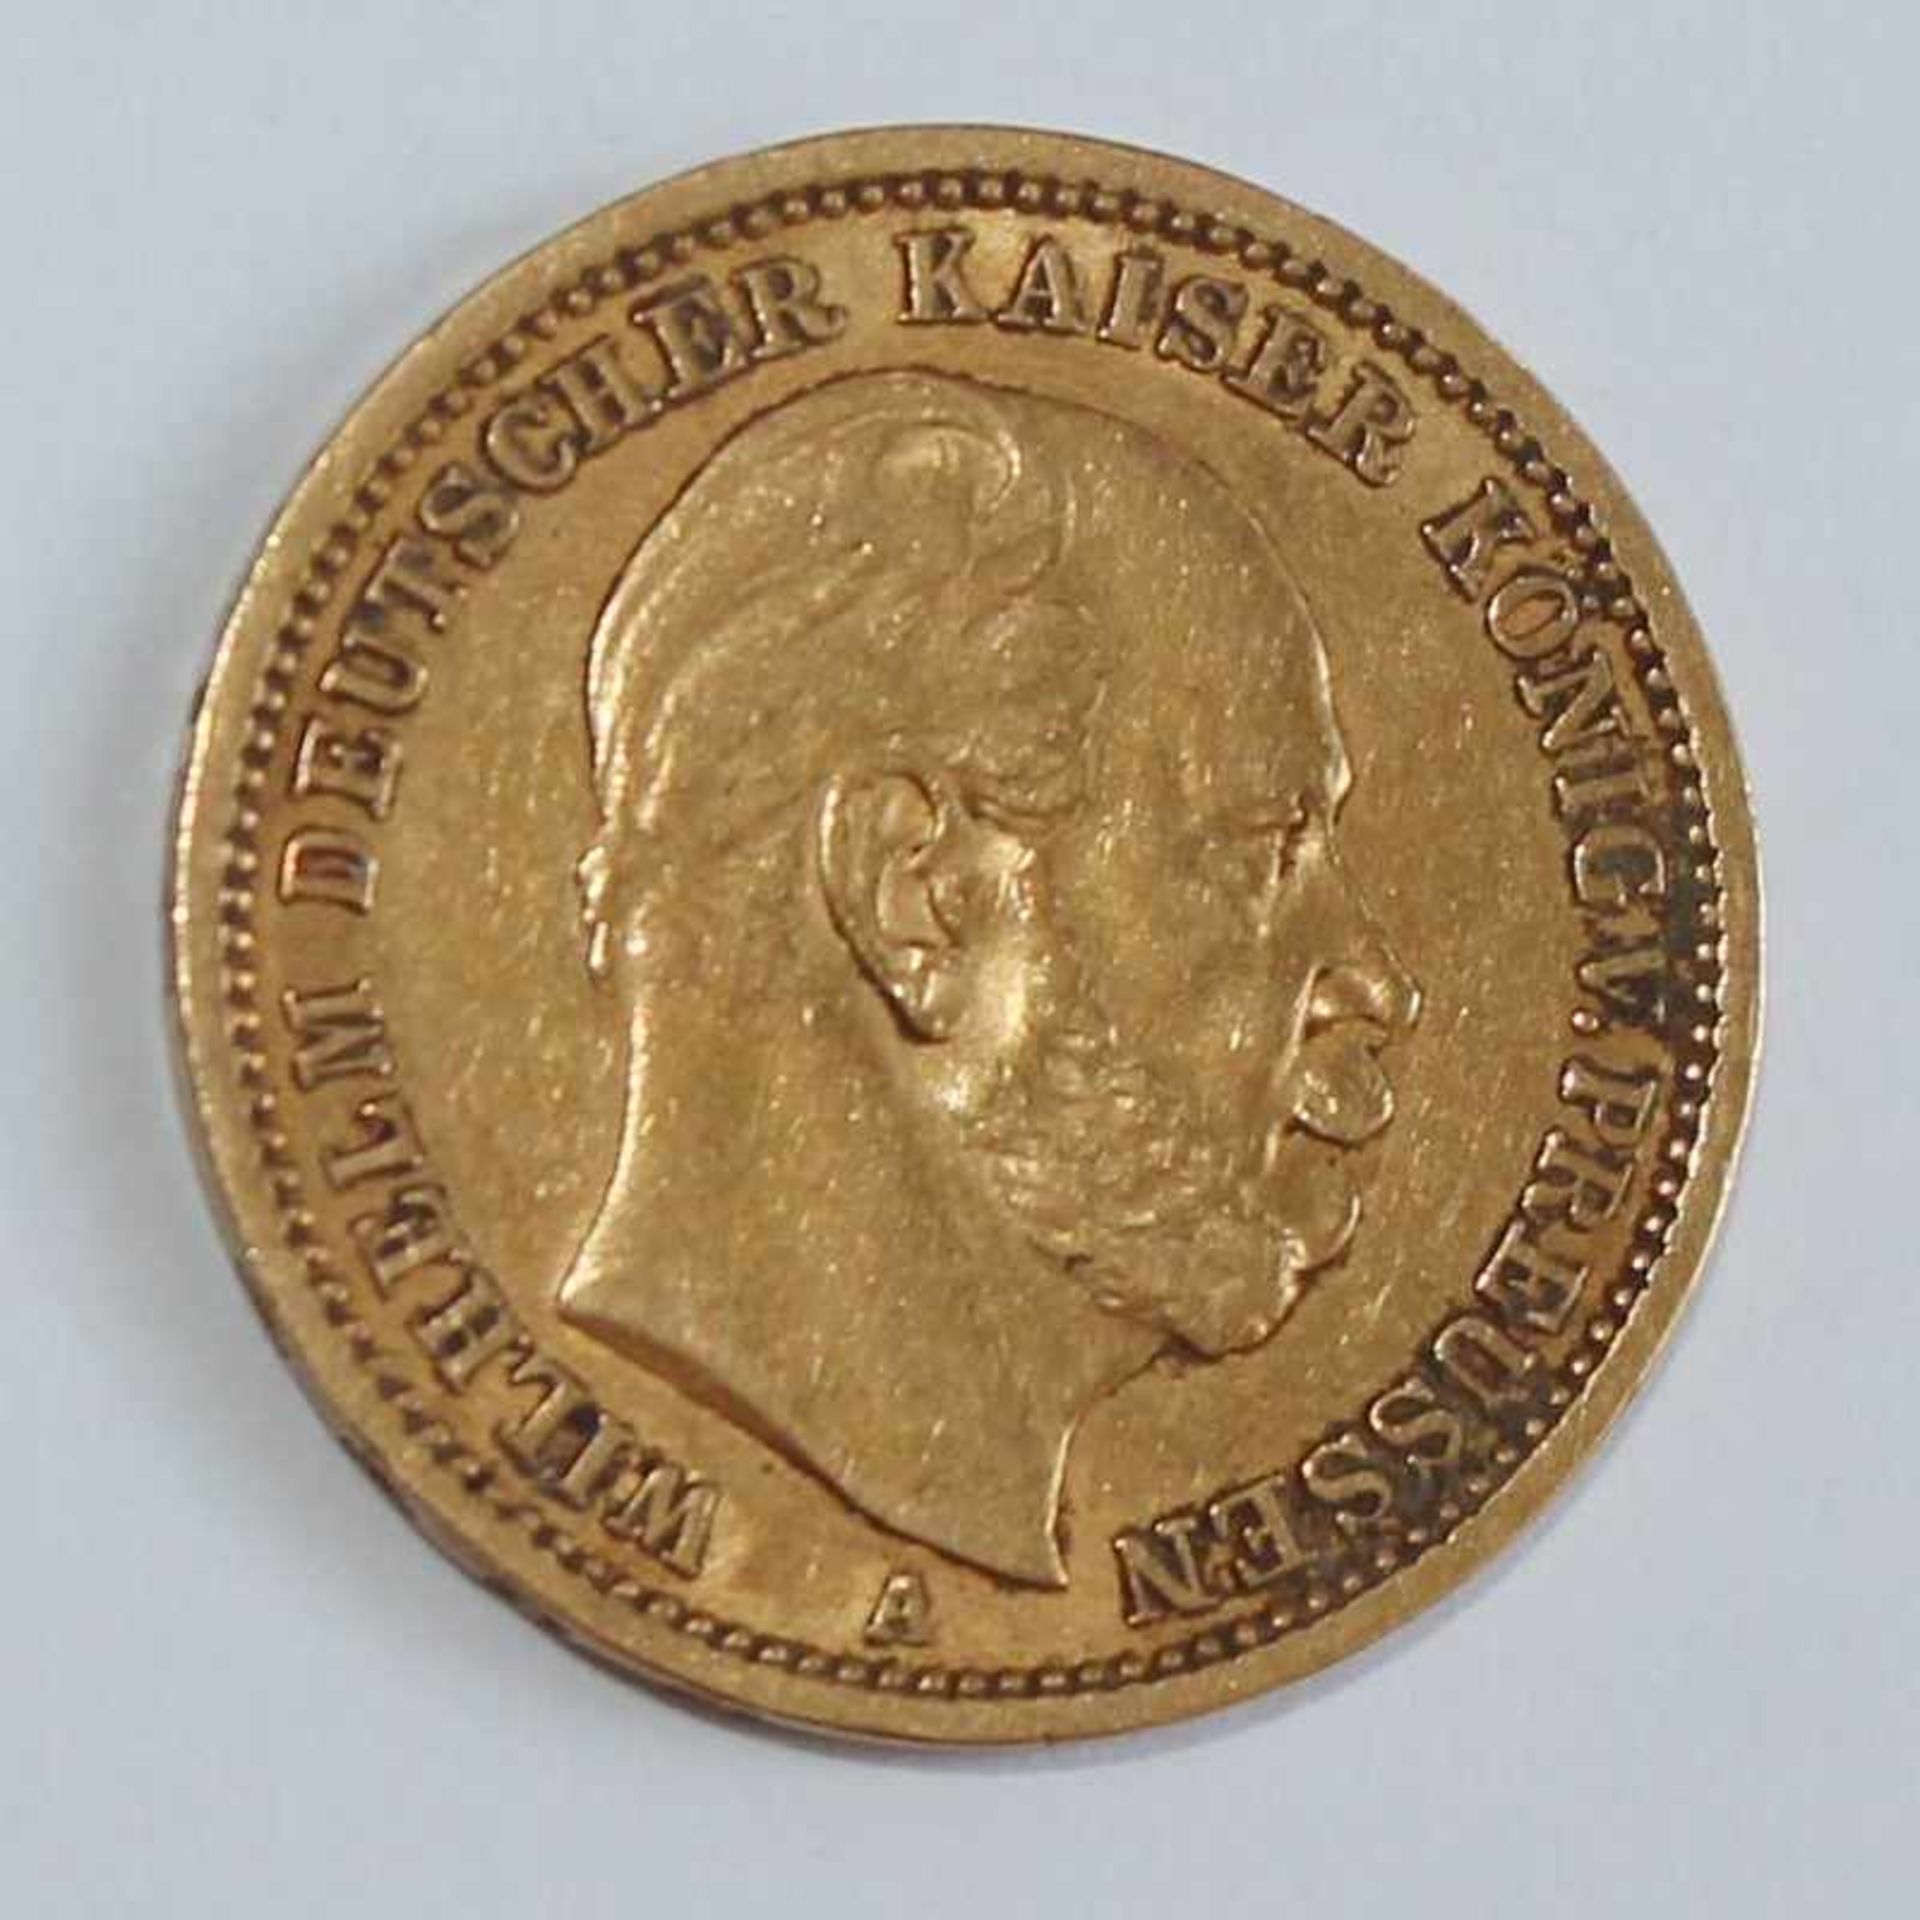 Gold Preussen - 20 Mark 1875 Wilhelm Kaiser König von Preussen, A, D 23mm, G 7,92g, vz